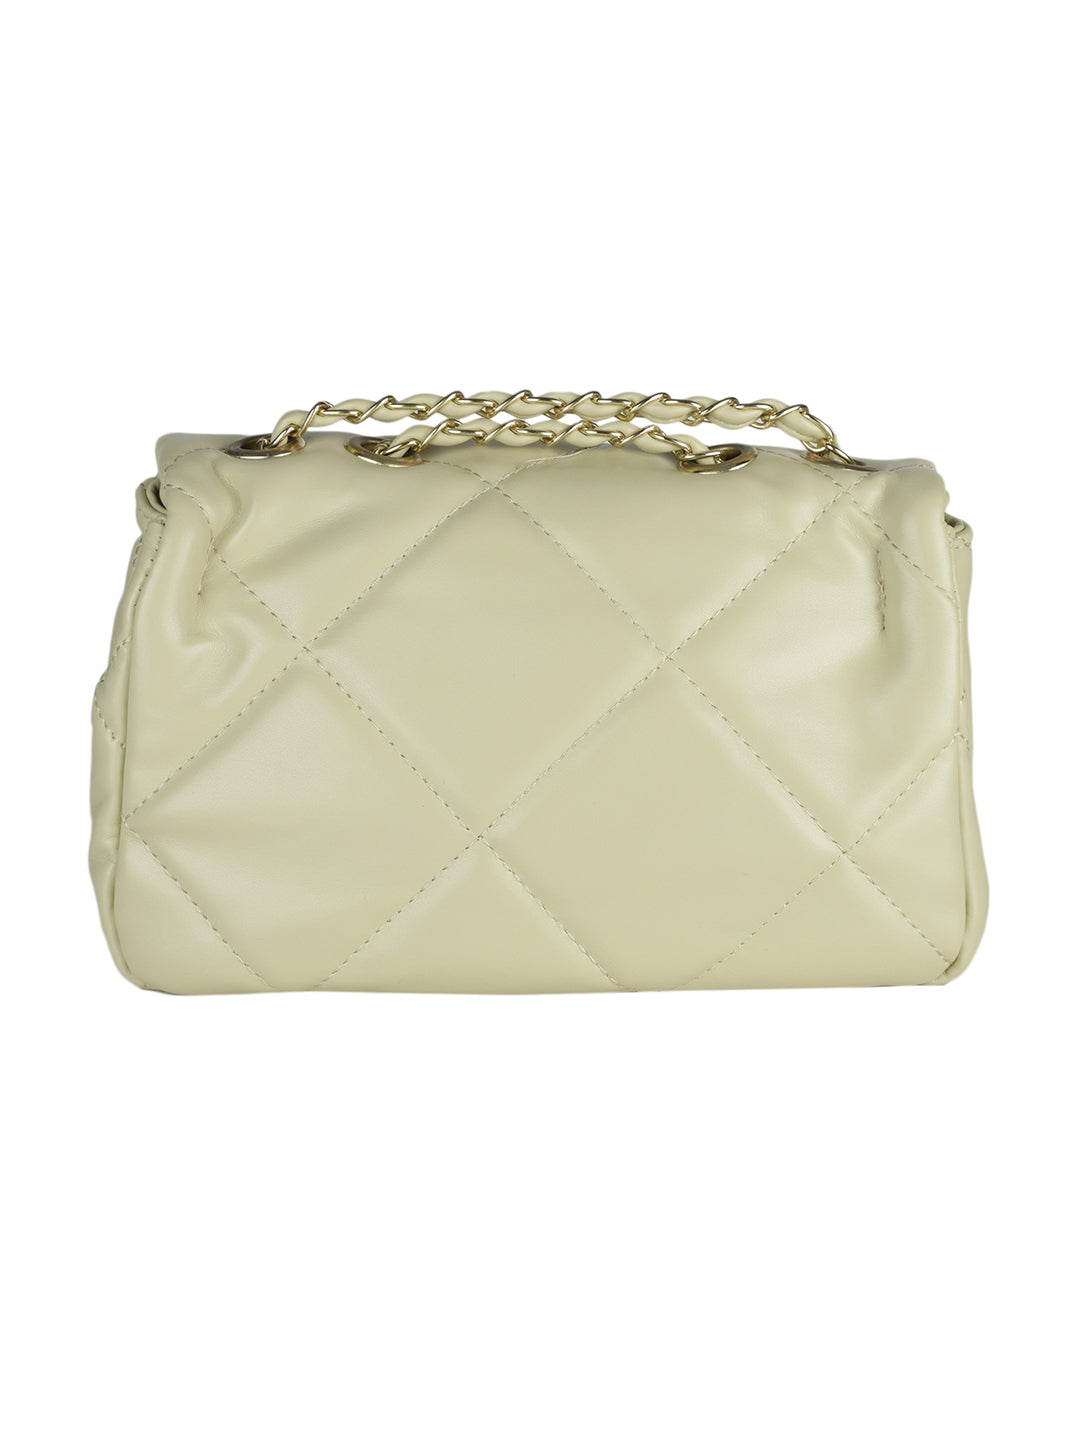 MINI WESST Cream Casual Solid Sling Bag(MWHB140GR)